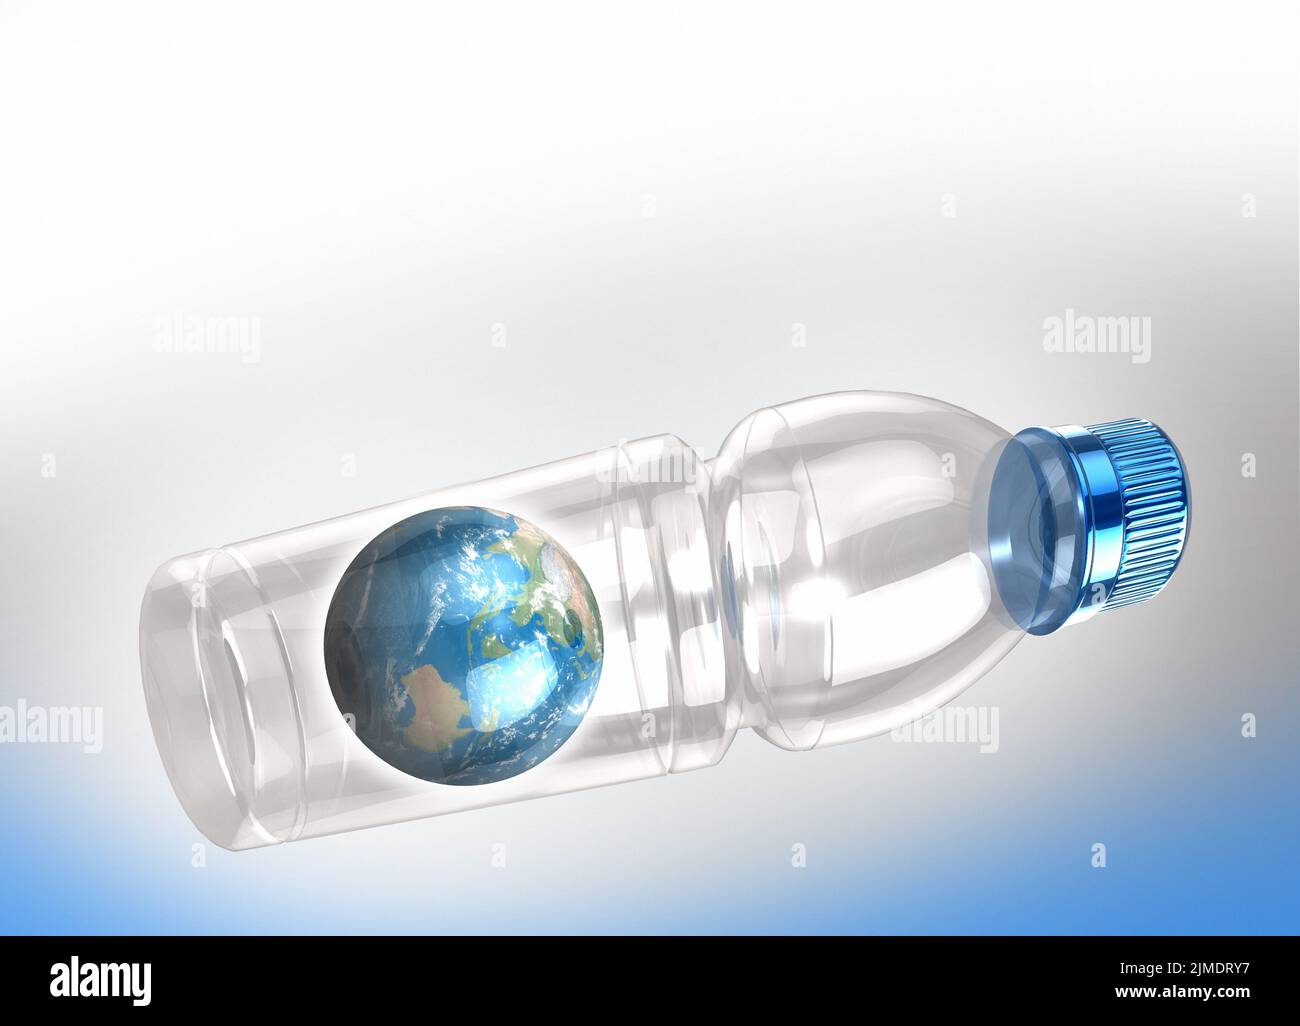 Plastic waste, conceptual illustration Stock Photo